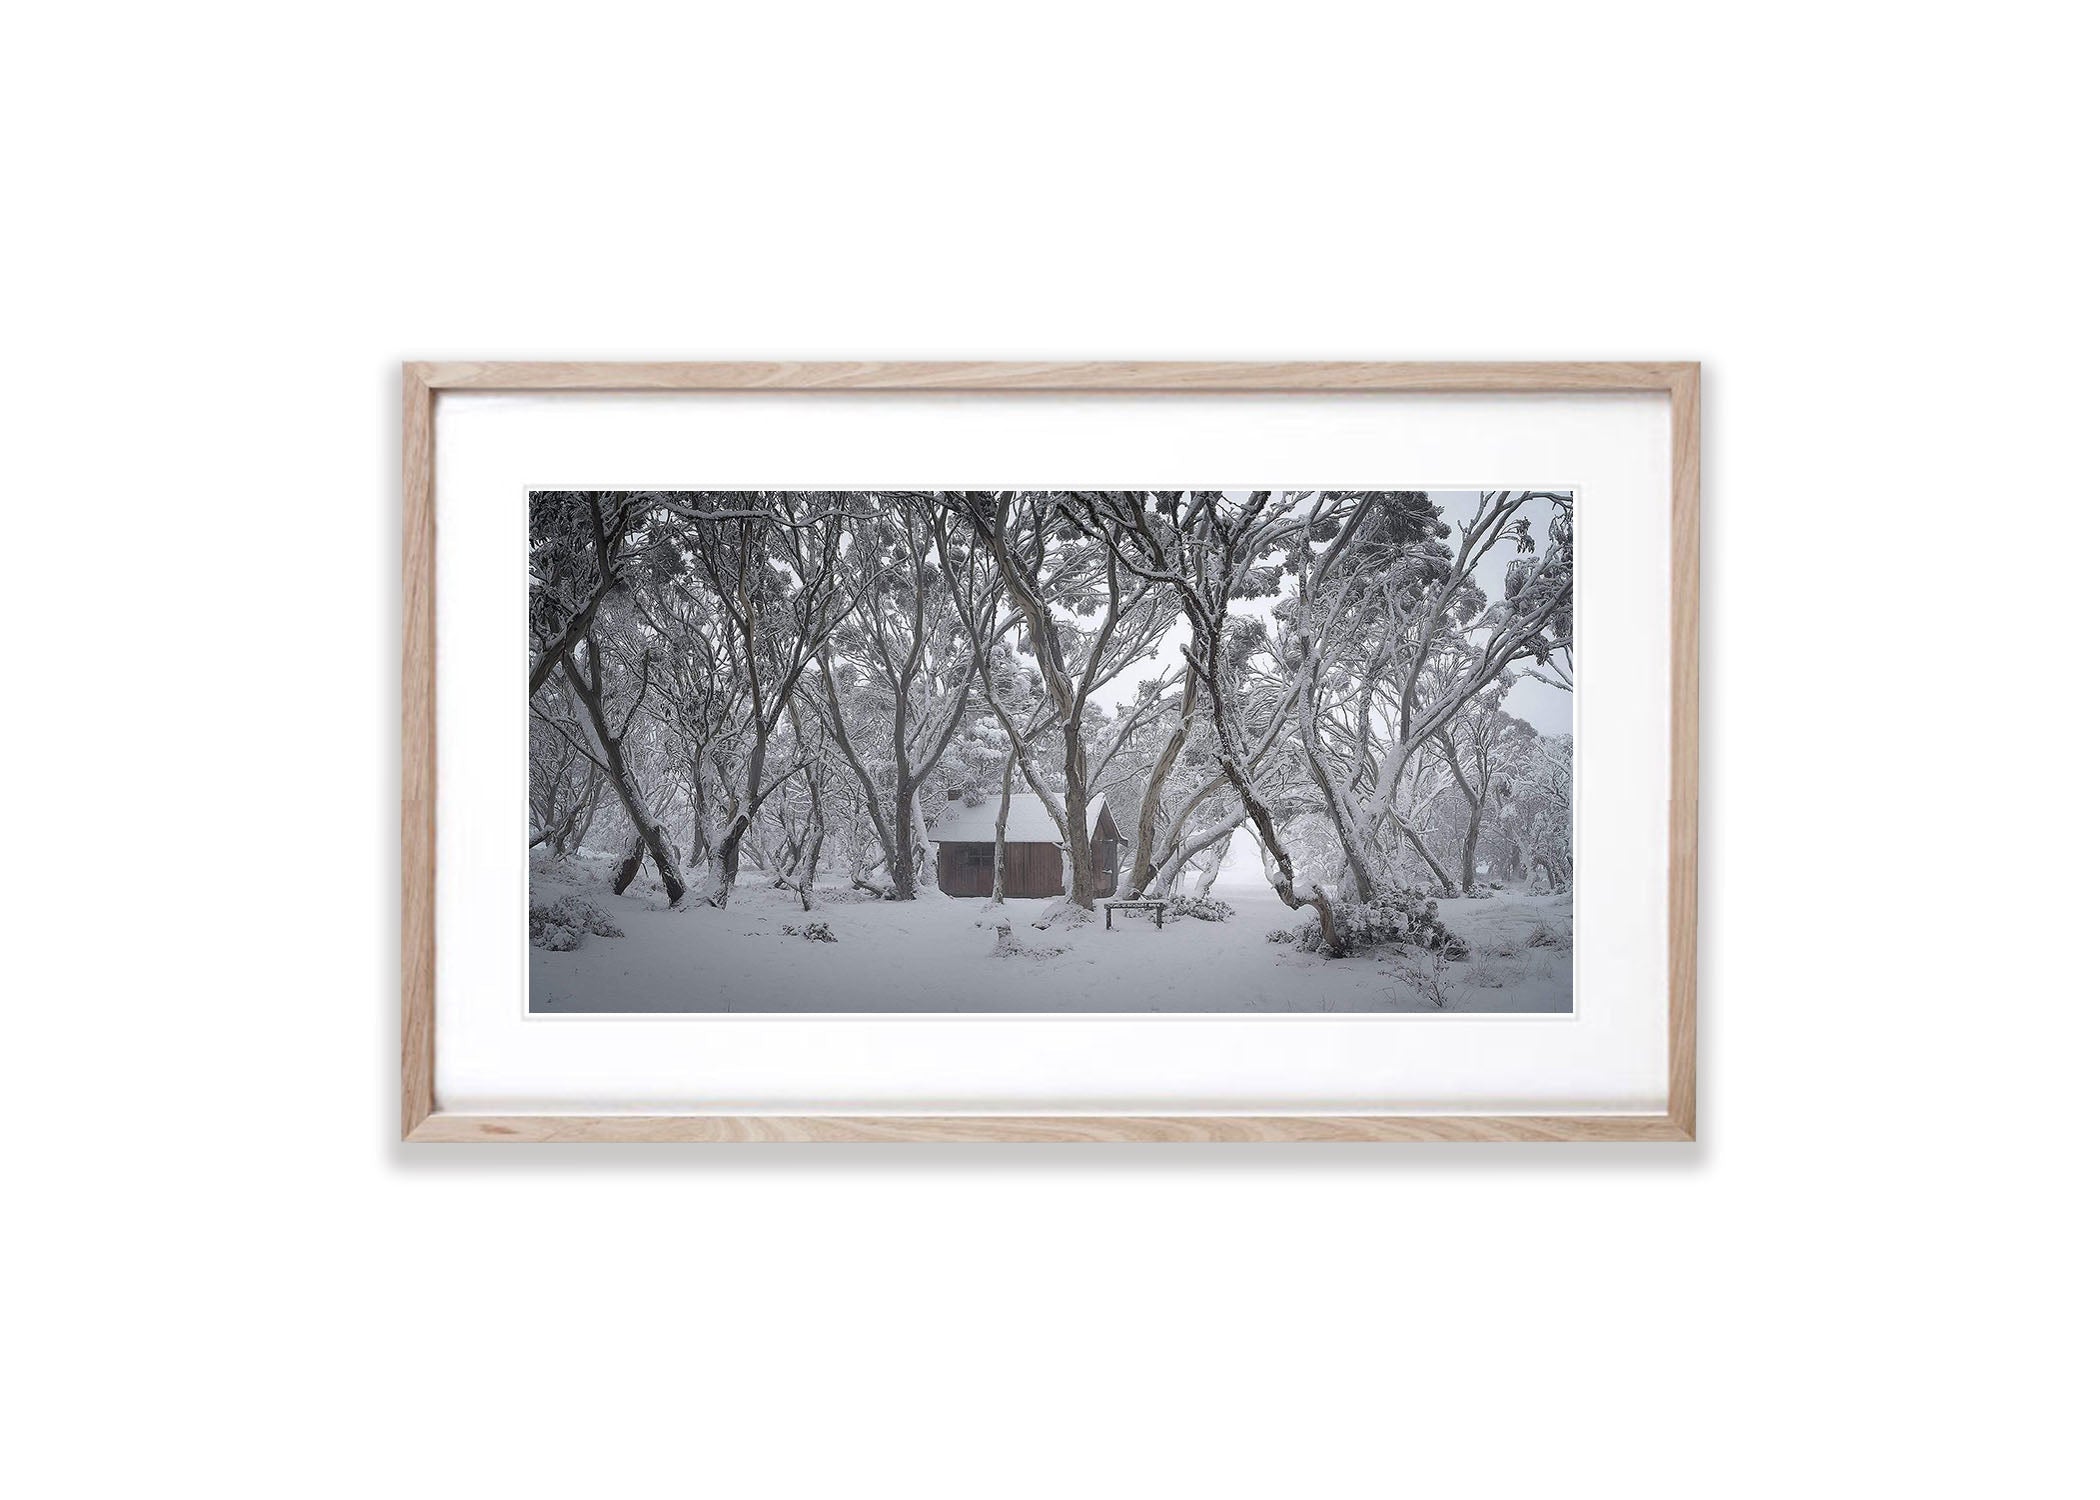 ARTWORK INSTOCK - JB Hut, Dinner Plain, Victorian High Country - 150 x 75cms Canvas Raw Oak Print